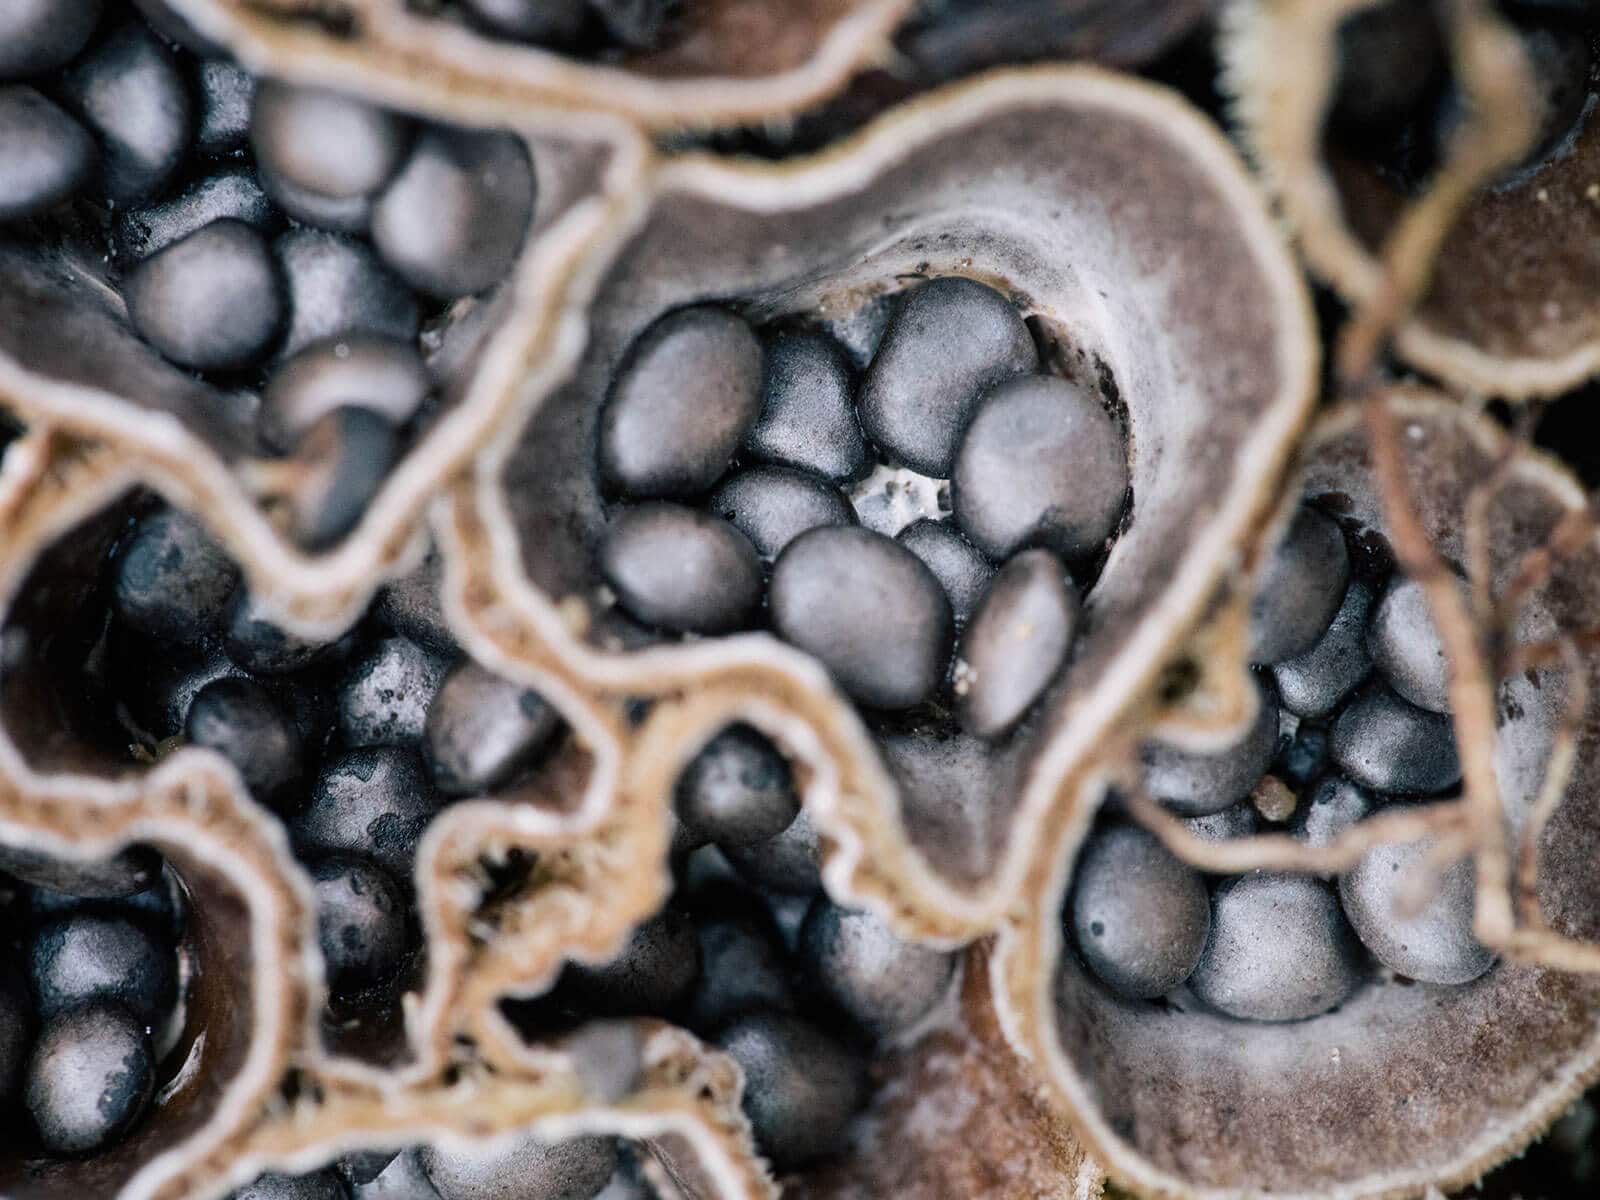 Close-up of cyathus striatus mushrooms (bird's nest fungi)